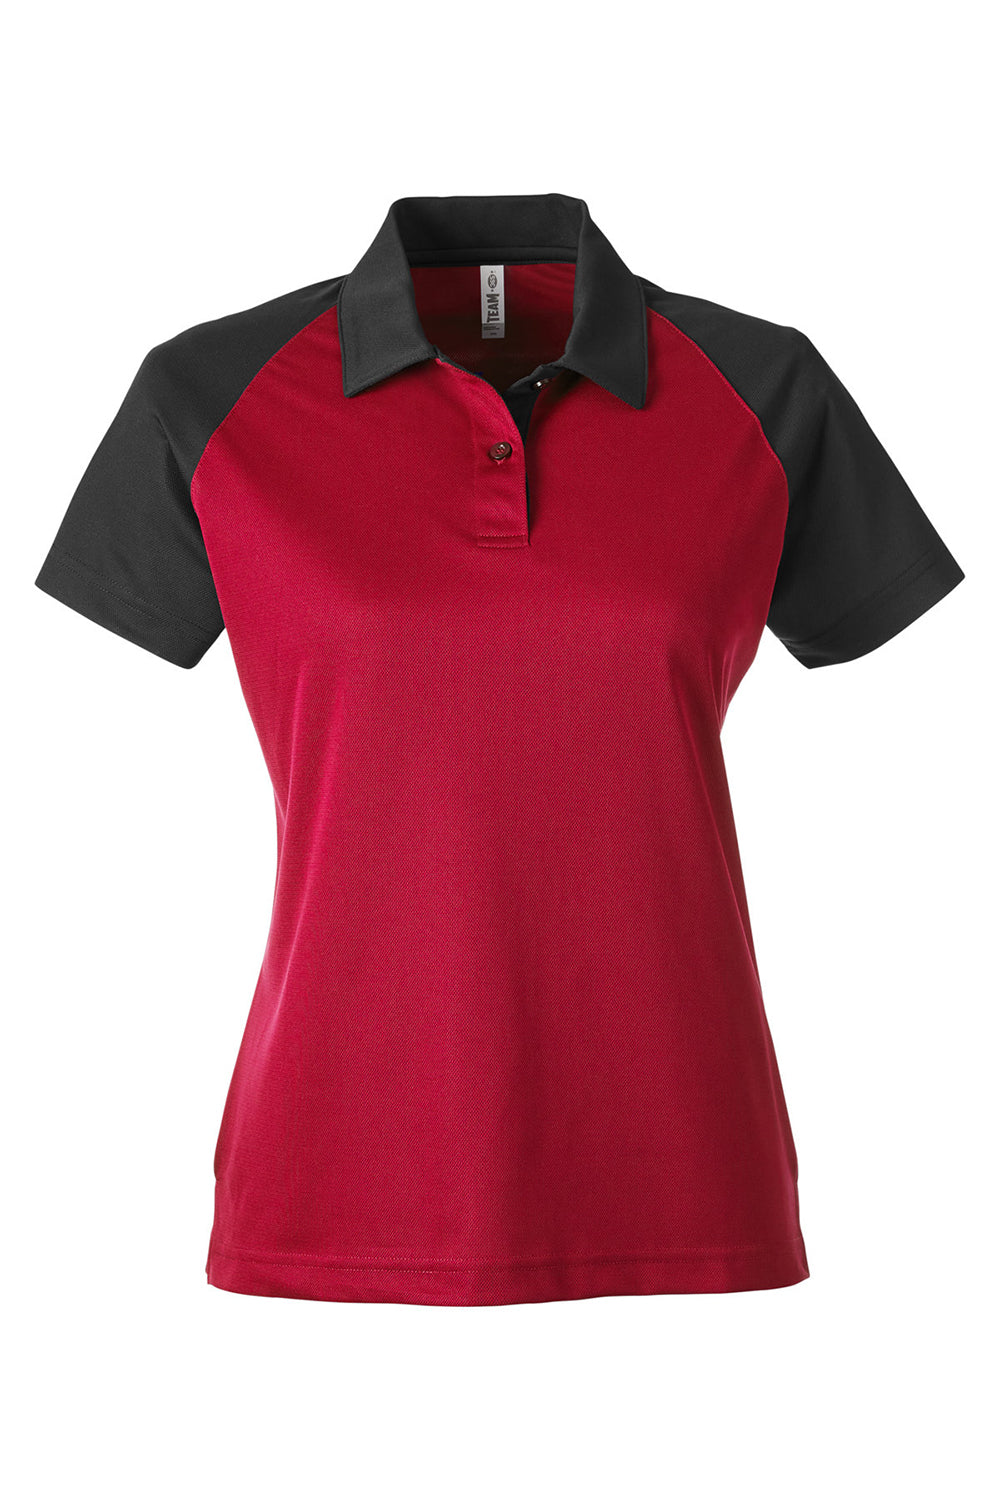 Team 365 TT21CW Womens Command Colorblock Moisture Wicking Short Sleeve Polo Shirt Red/Black Flat Front